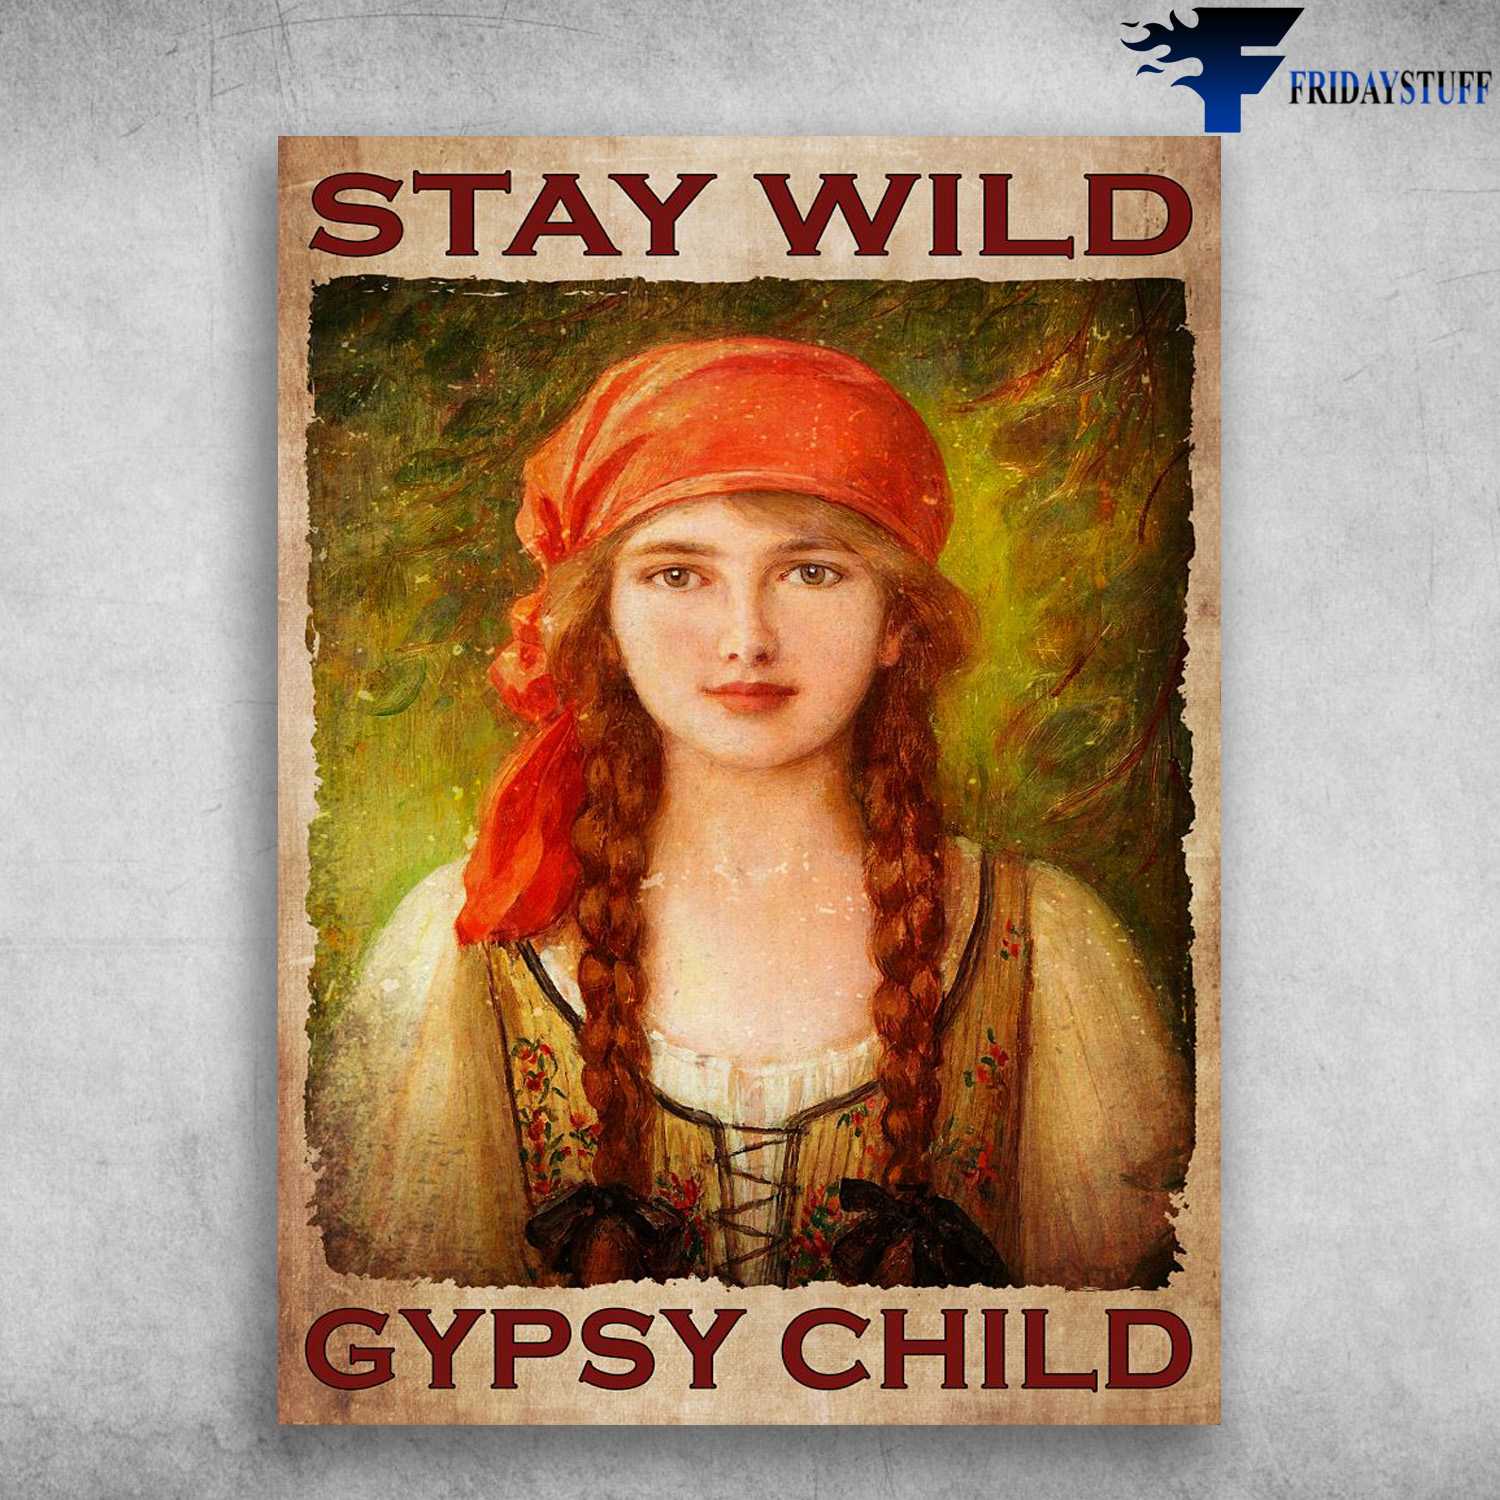 Beautiful Girl, Wall Poster - Stay Wild, Gypsy Child